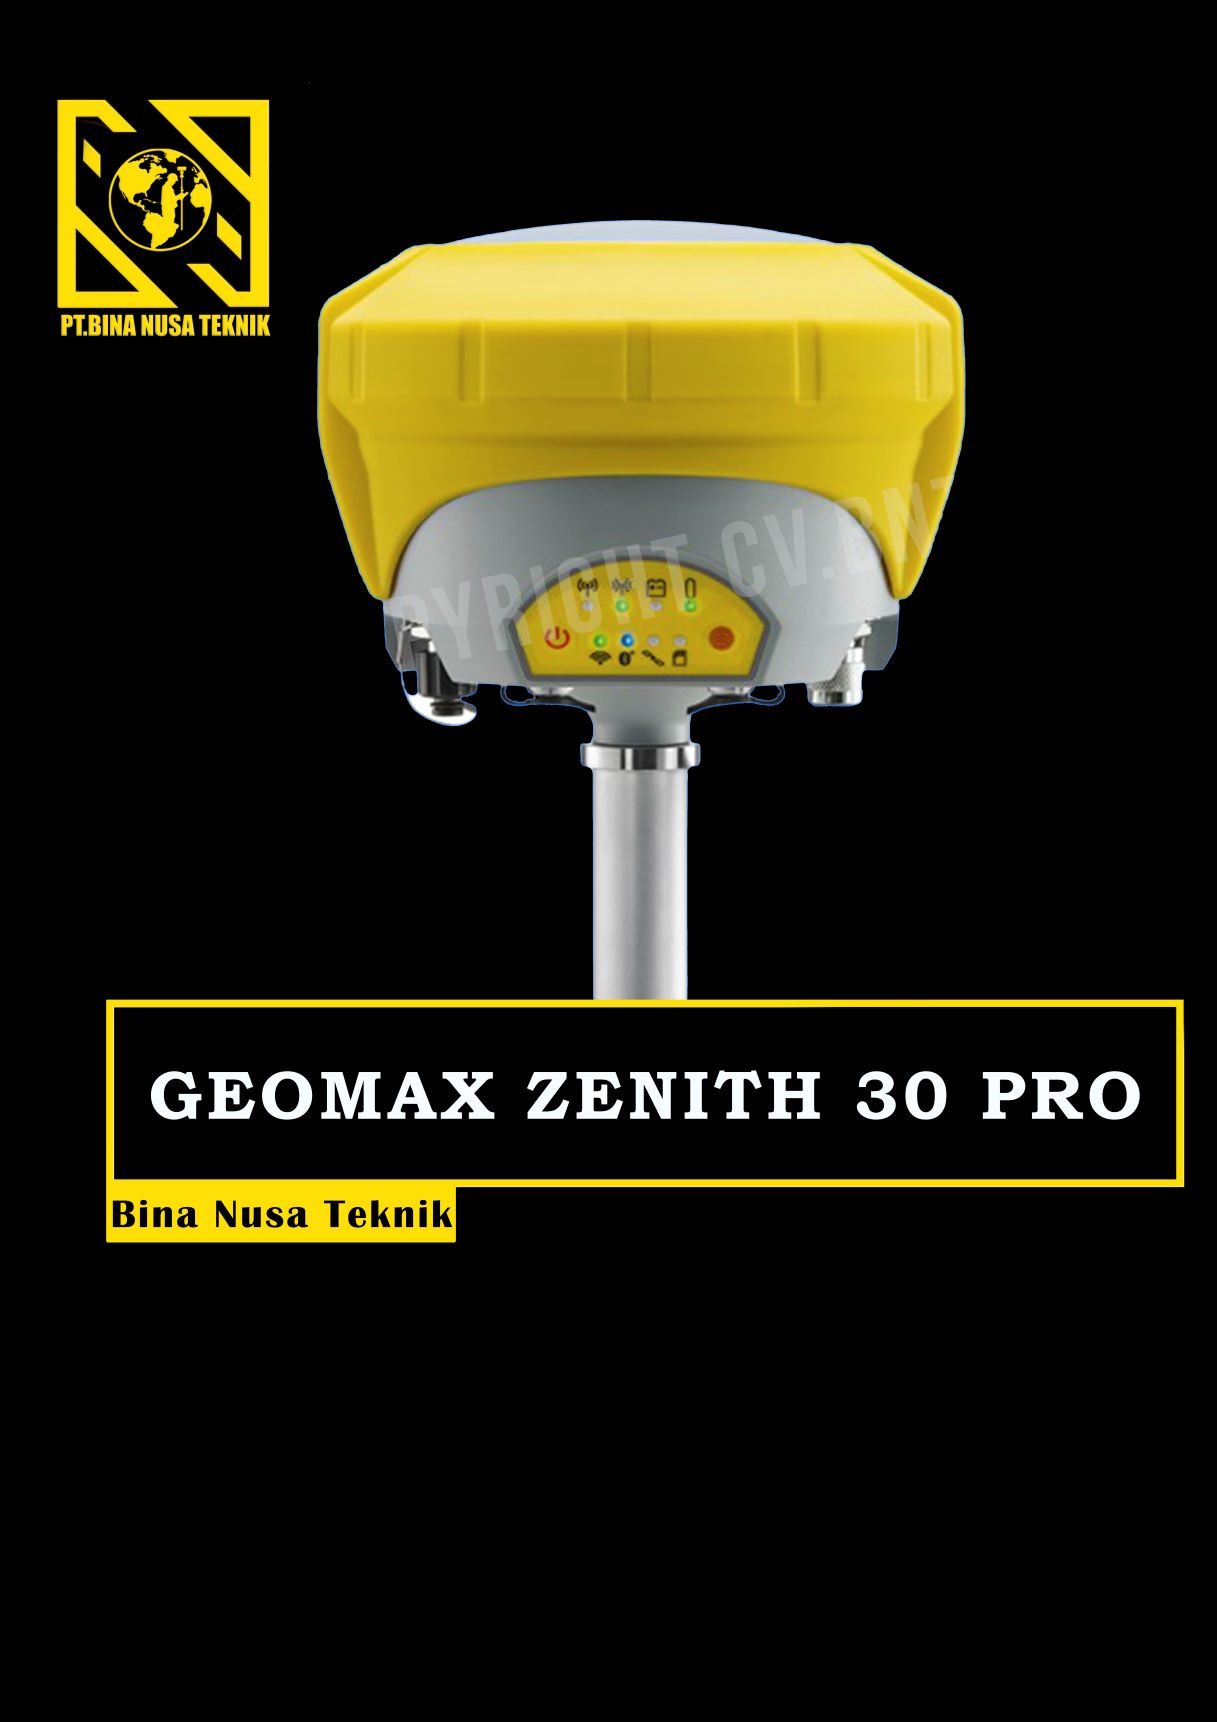 gps rtk gnss geomax zenith 30 pro